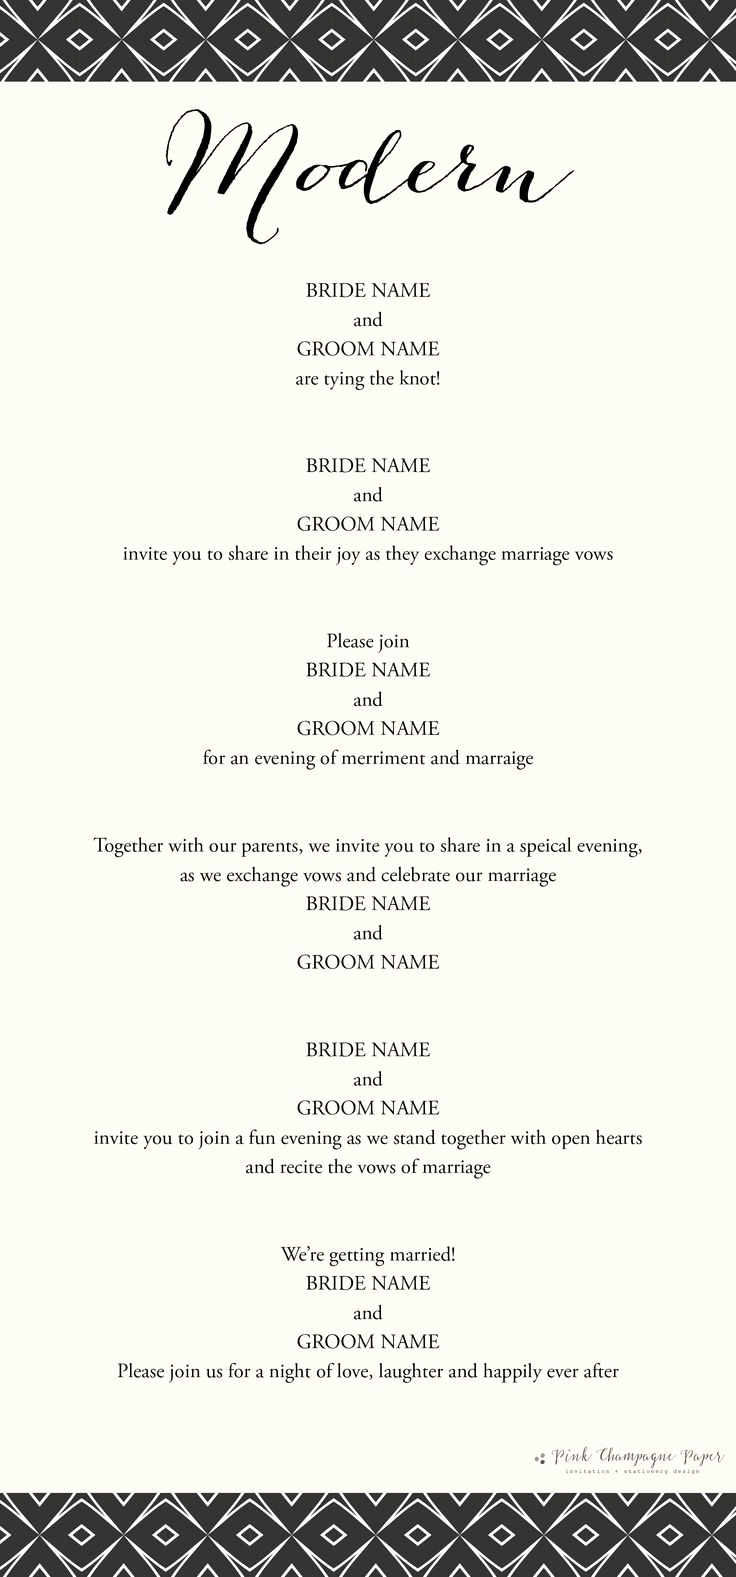 Modern Wedding Invitation Wording Lovely 1000 Ideas About Modern Wedding Invitation Wording On